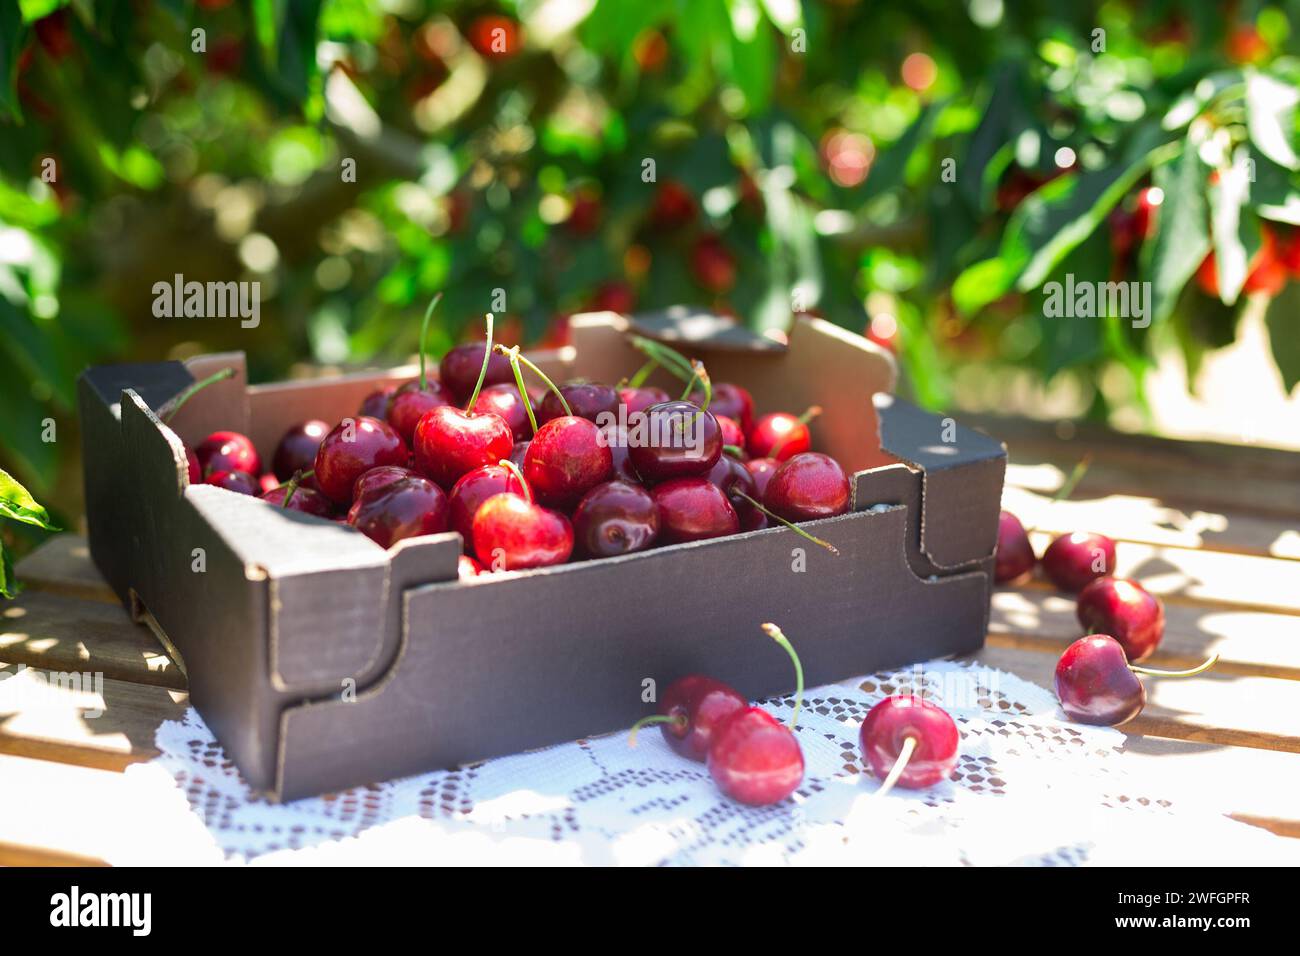 Ripe juicy cherries in black cardboard box on table in garden cherry trees Stock Photo